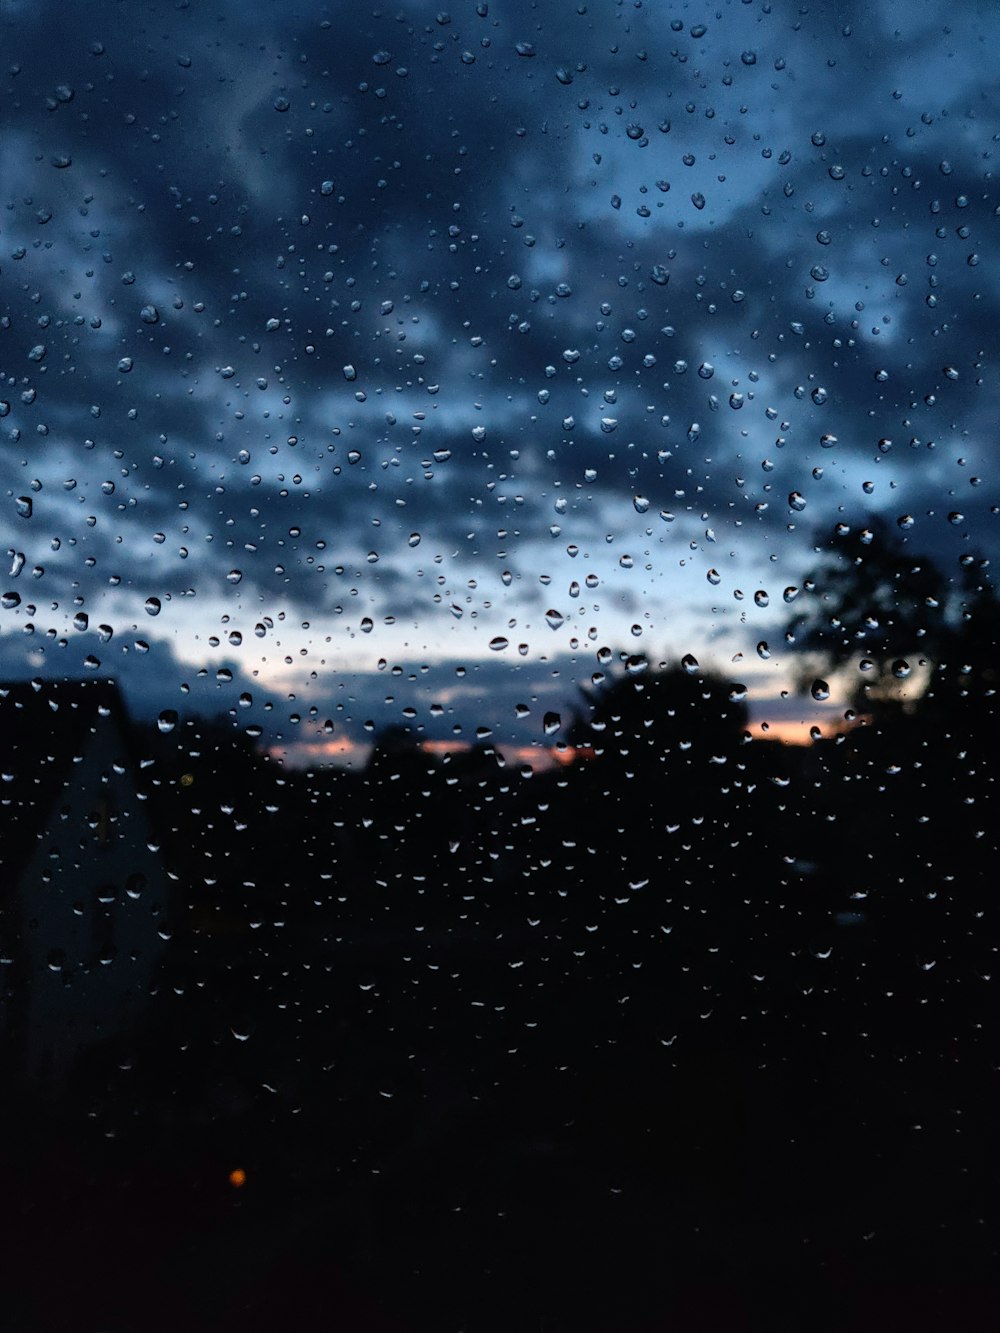 rain drops on a window as the sun sets